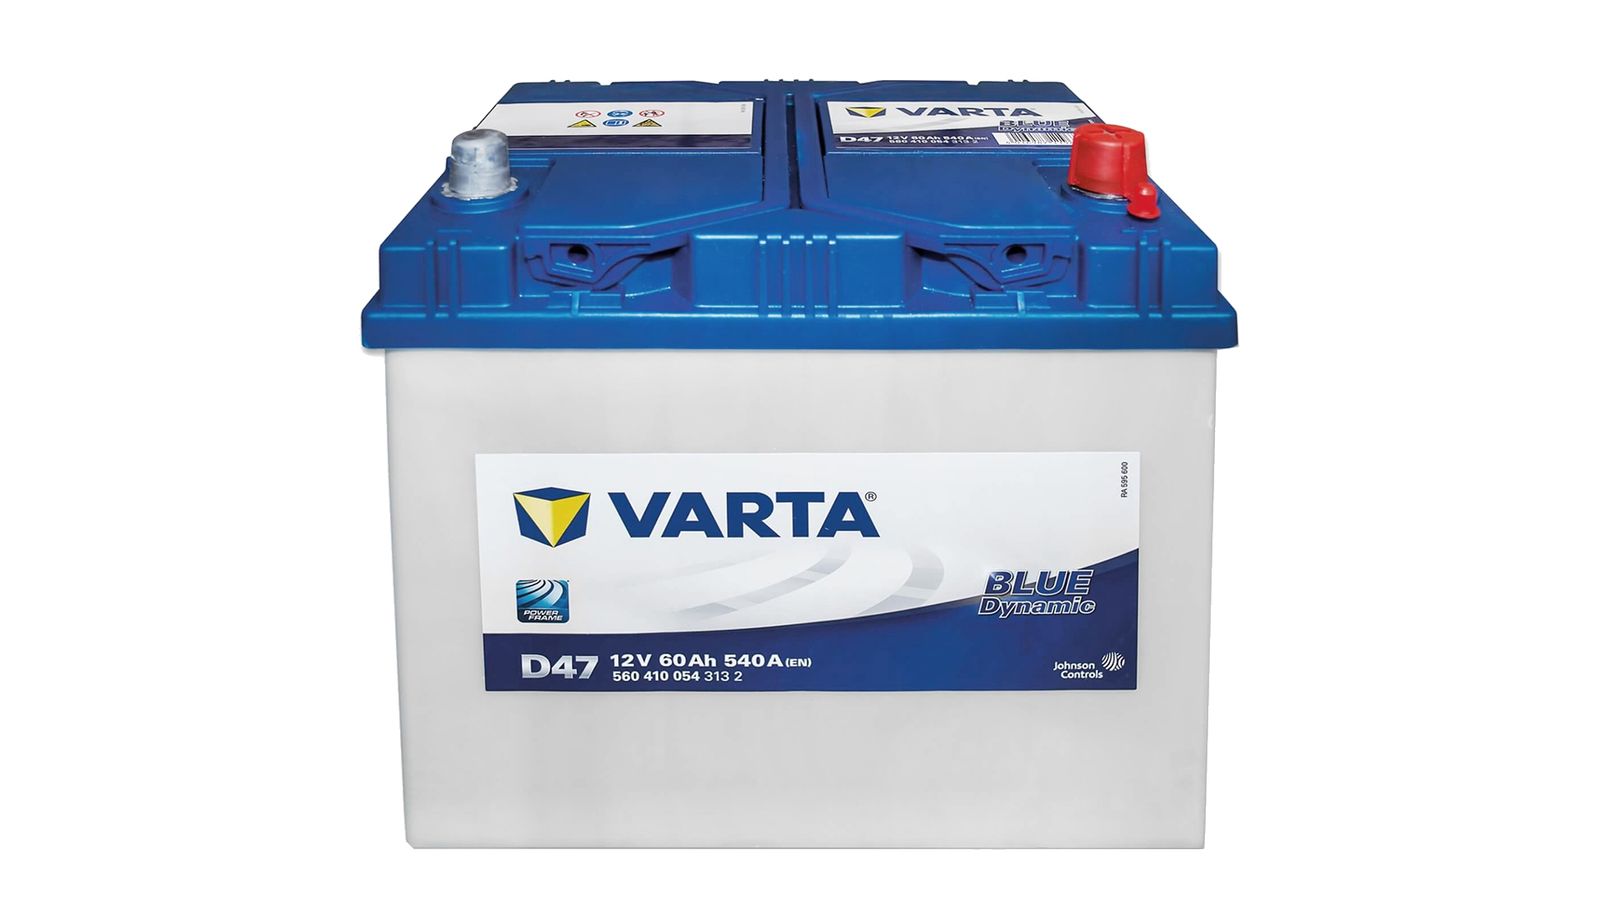 Аккумуляторная батарея VARTA BLUE 6СТ60 D47 560 410 054. 6СТ60 1100*И фотография №1